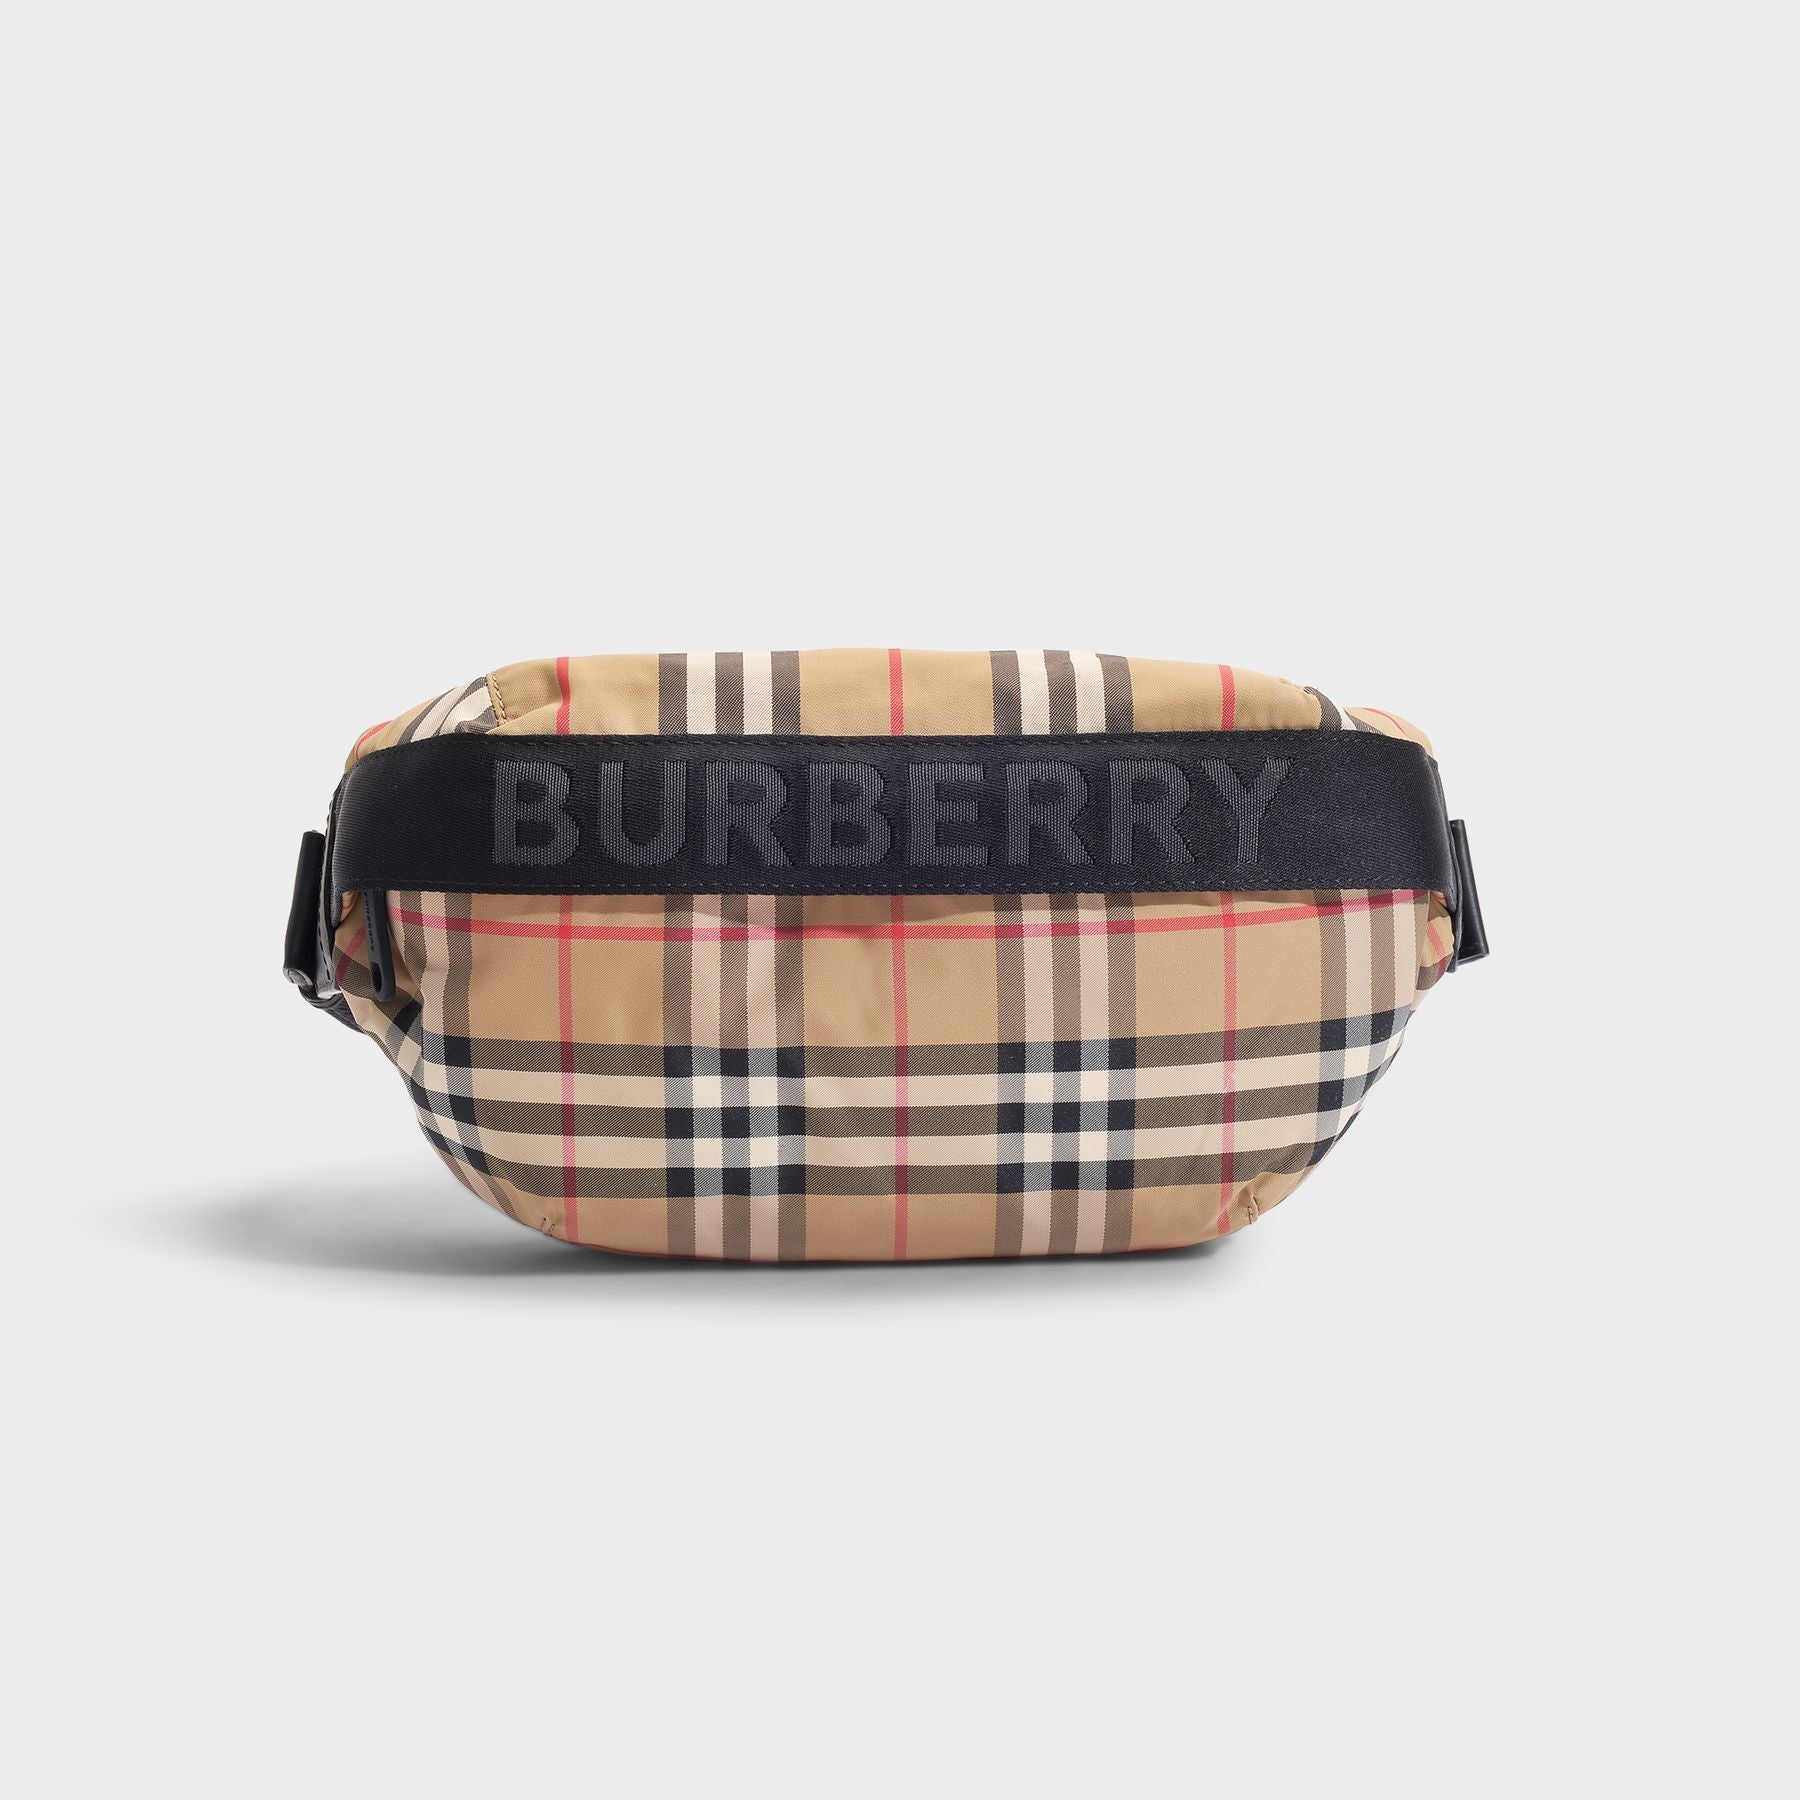 Brand new unisex Burberry bum-bag (sac banane)